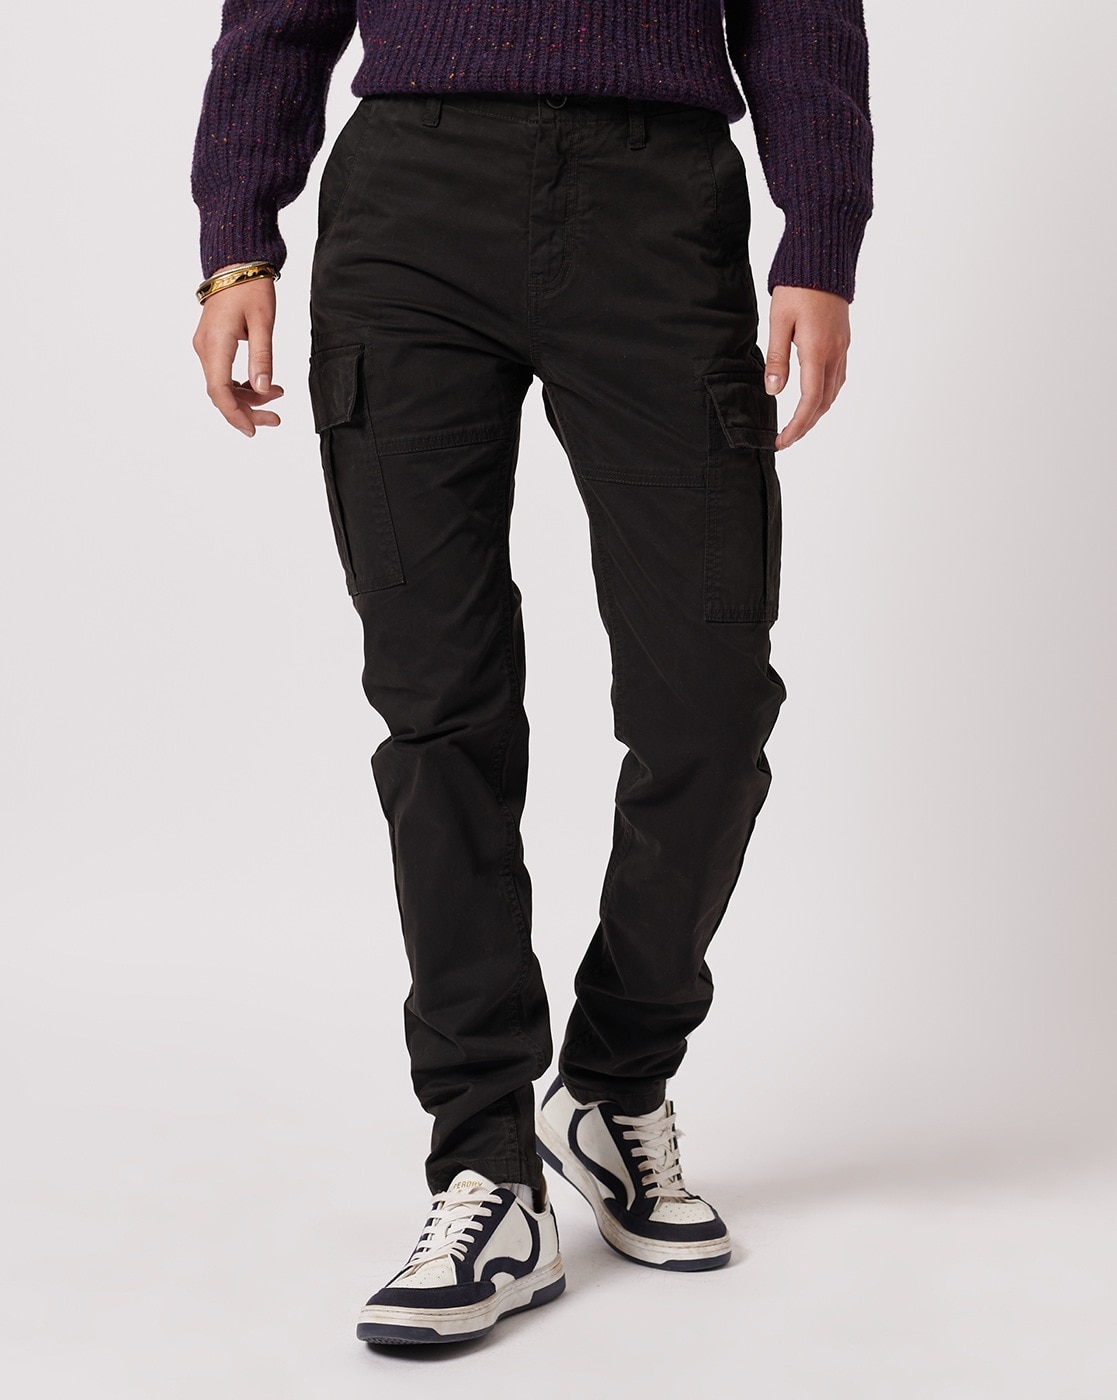 Buy Black Trousers  Pants for Women by SUPERDRY Online  Ajiocom